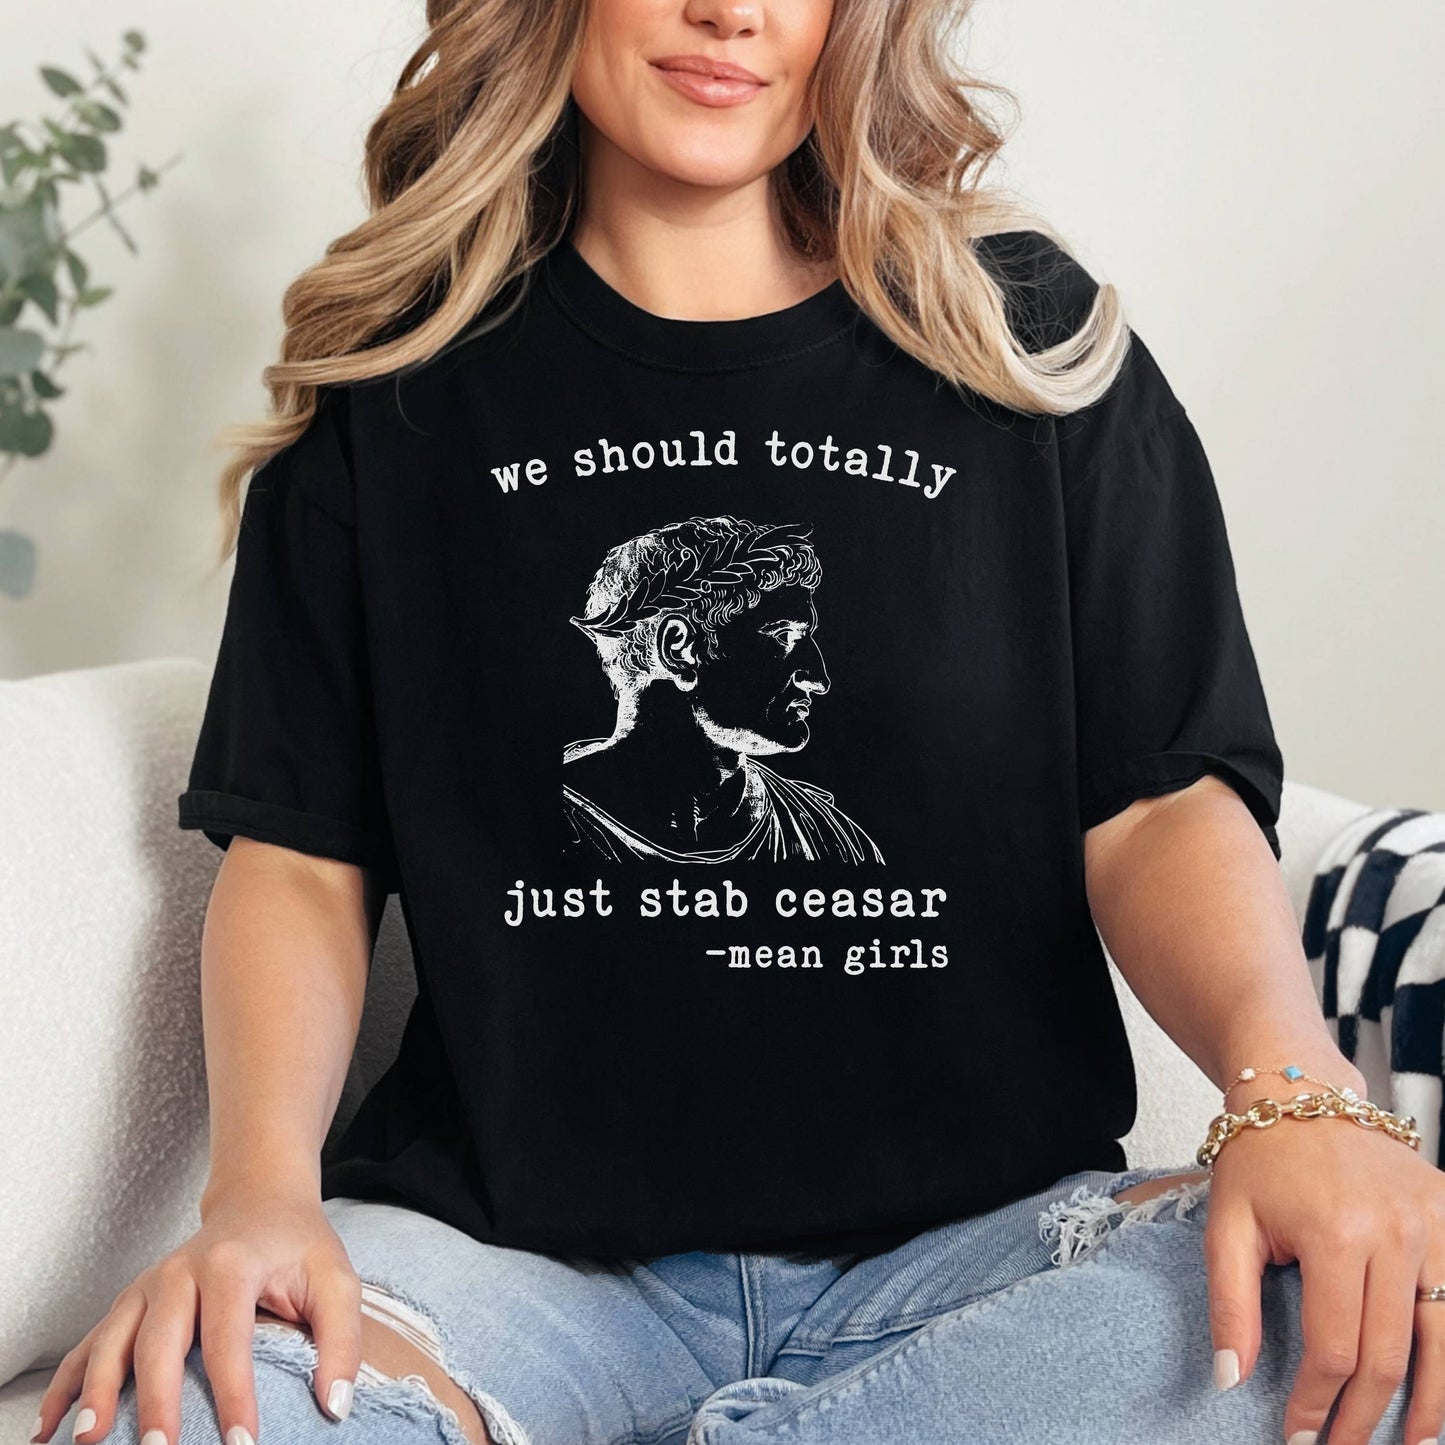 We Should Totally Just Stab Caesar T-Shirt, Mean Girls Vintage Shirt